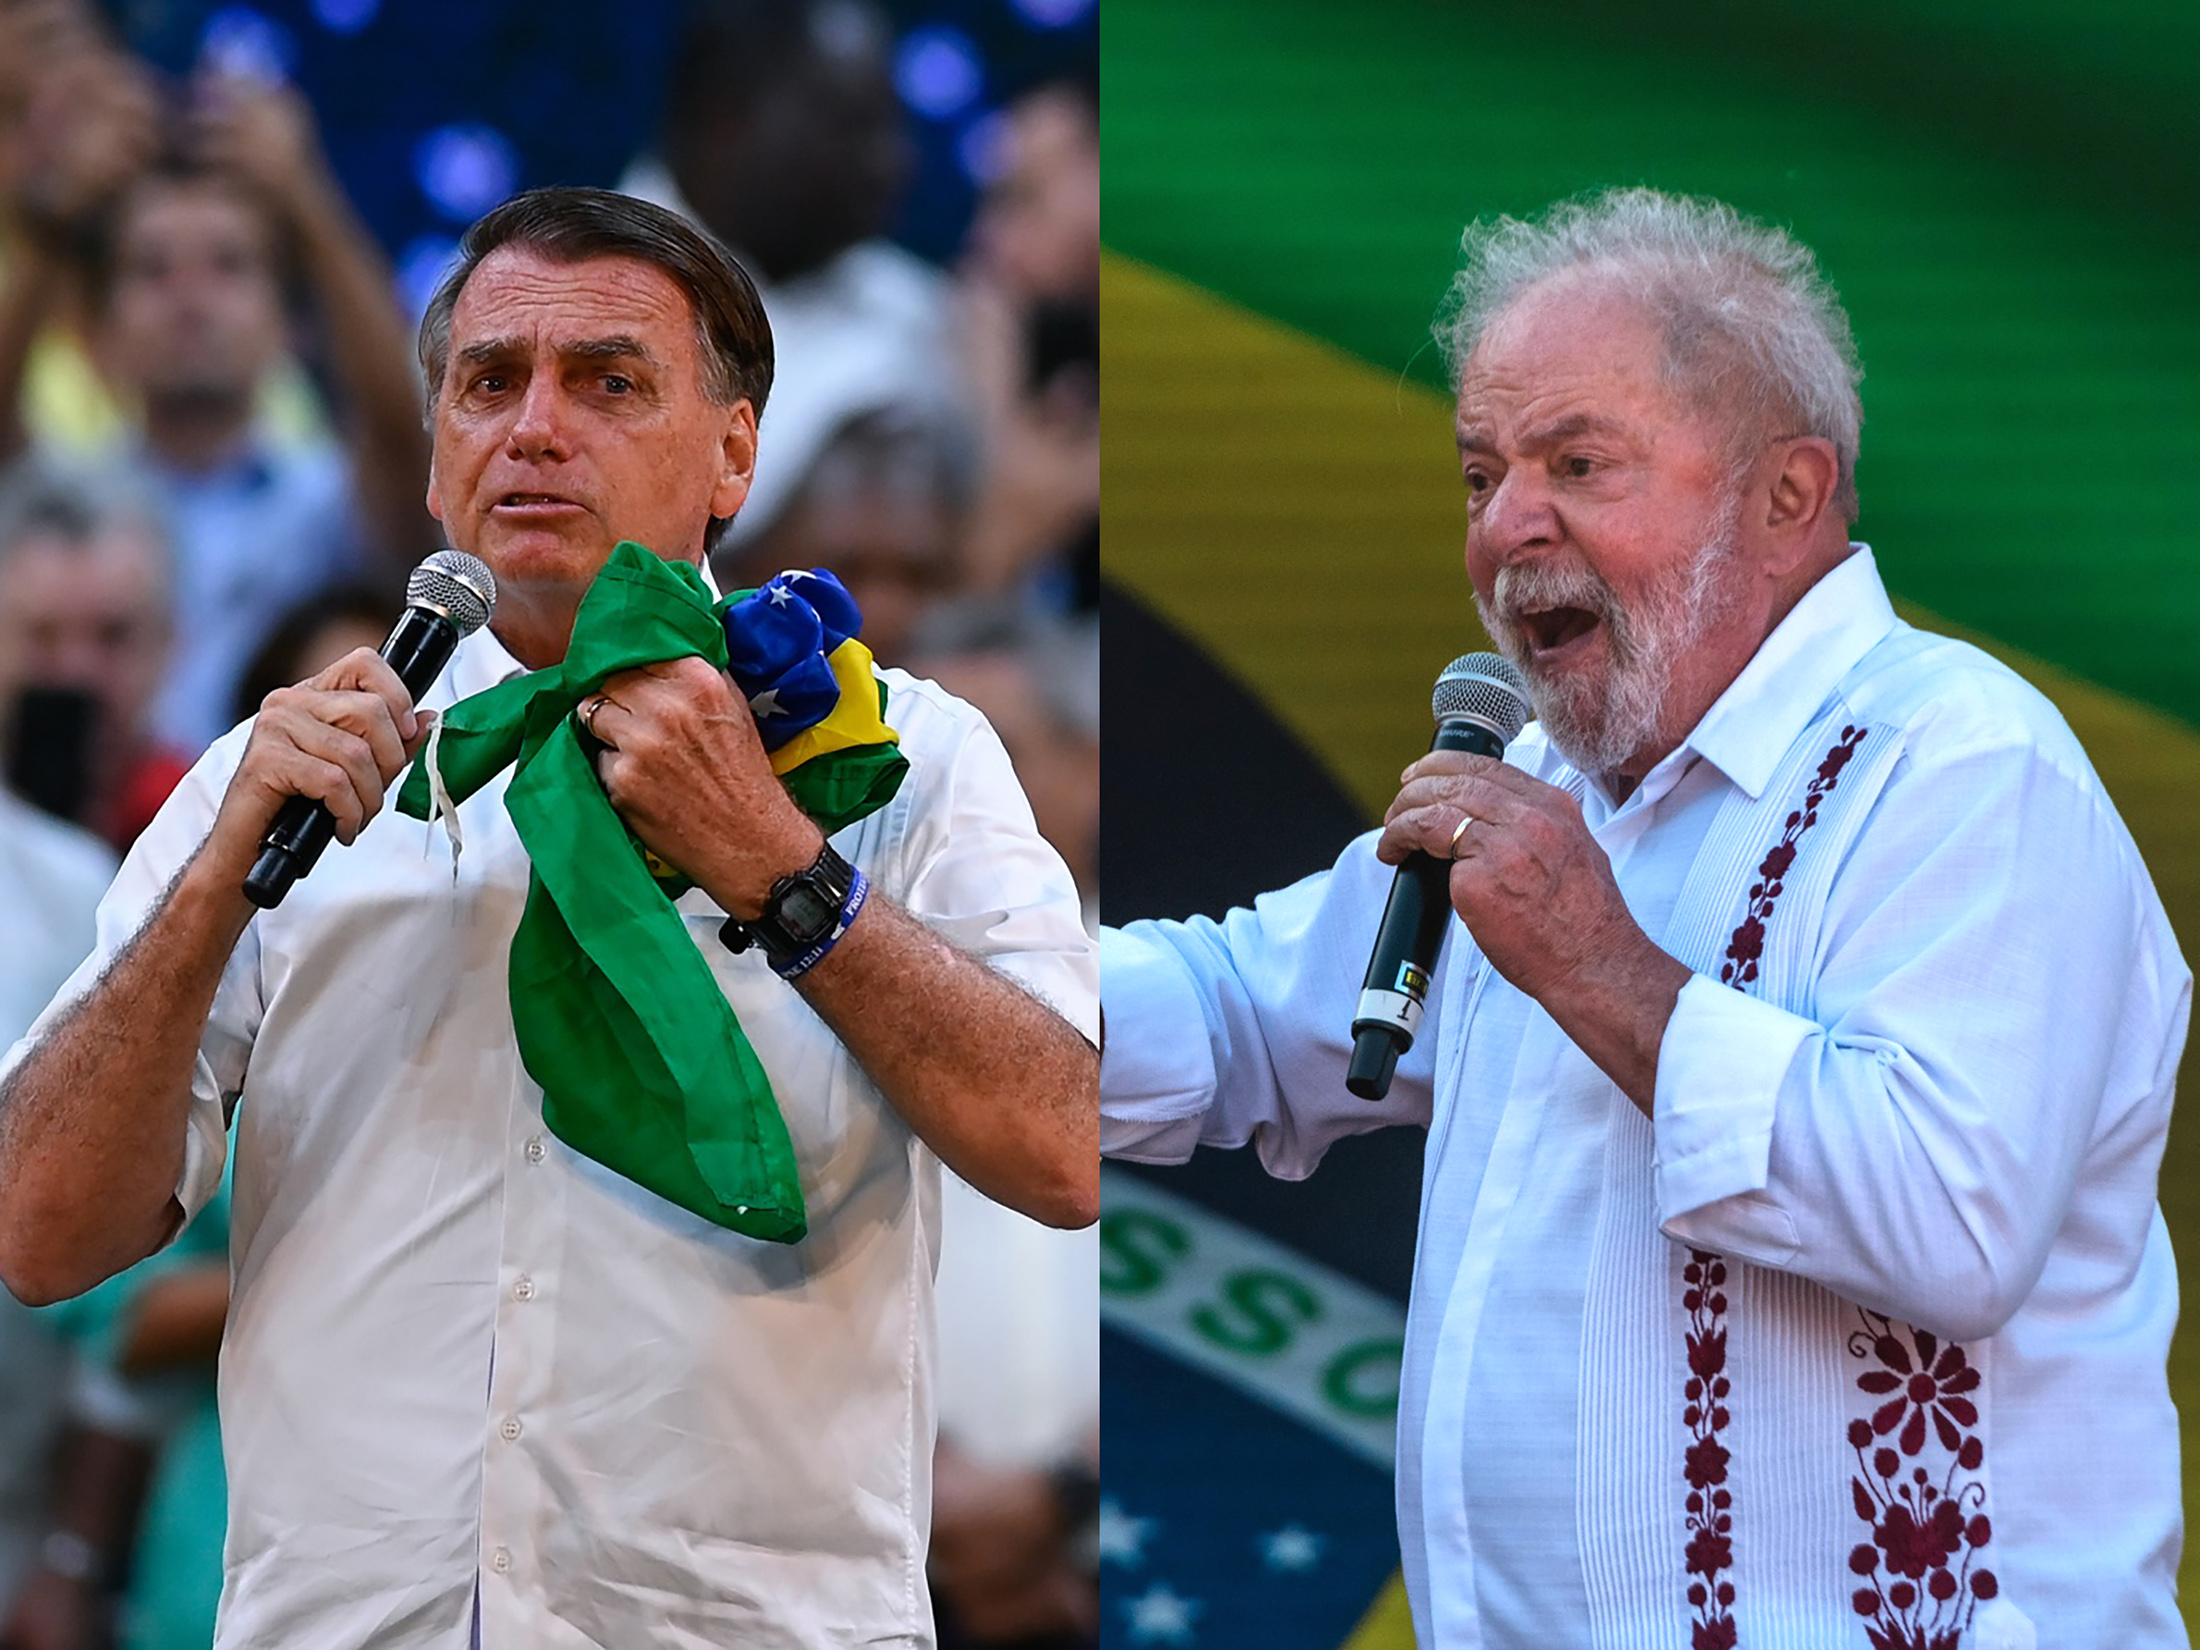 President Jair Bolsonaro and former President Lula